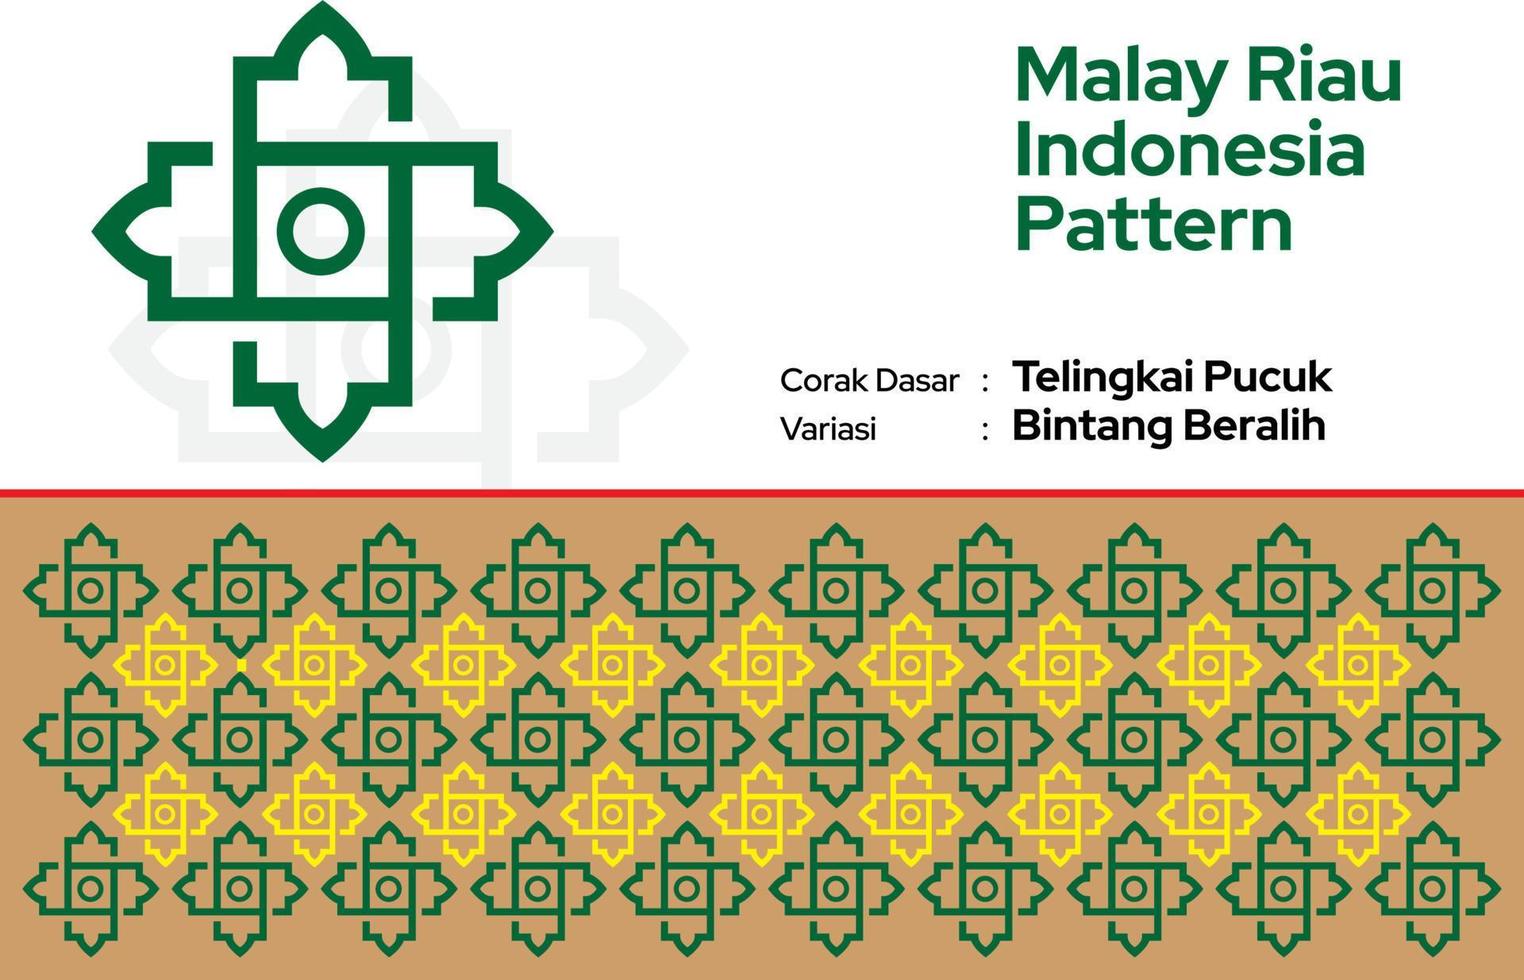 modelo malayo riau batik Songket tenun, Costura motivo telingkai pucuk, bintang beralih, melayu antecedentes vector